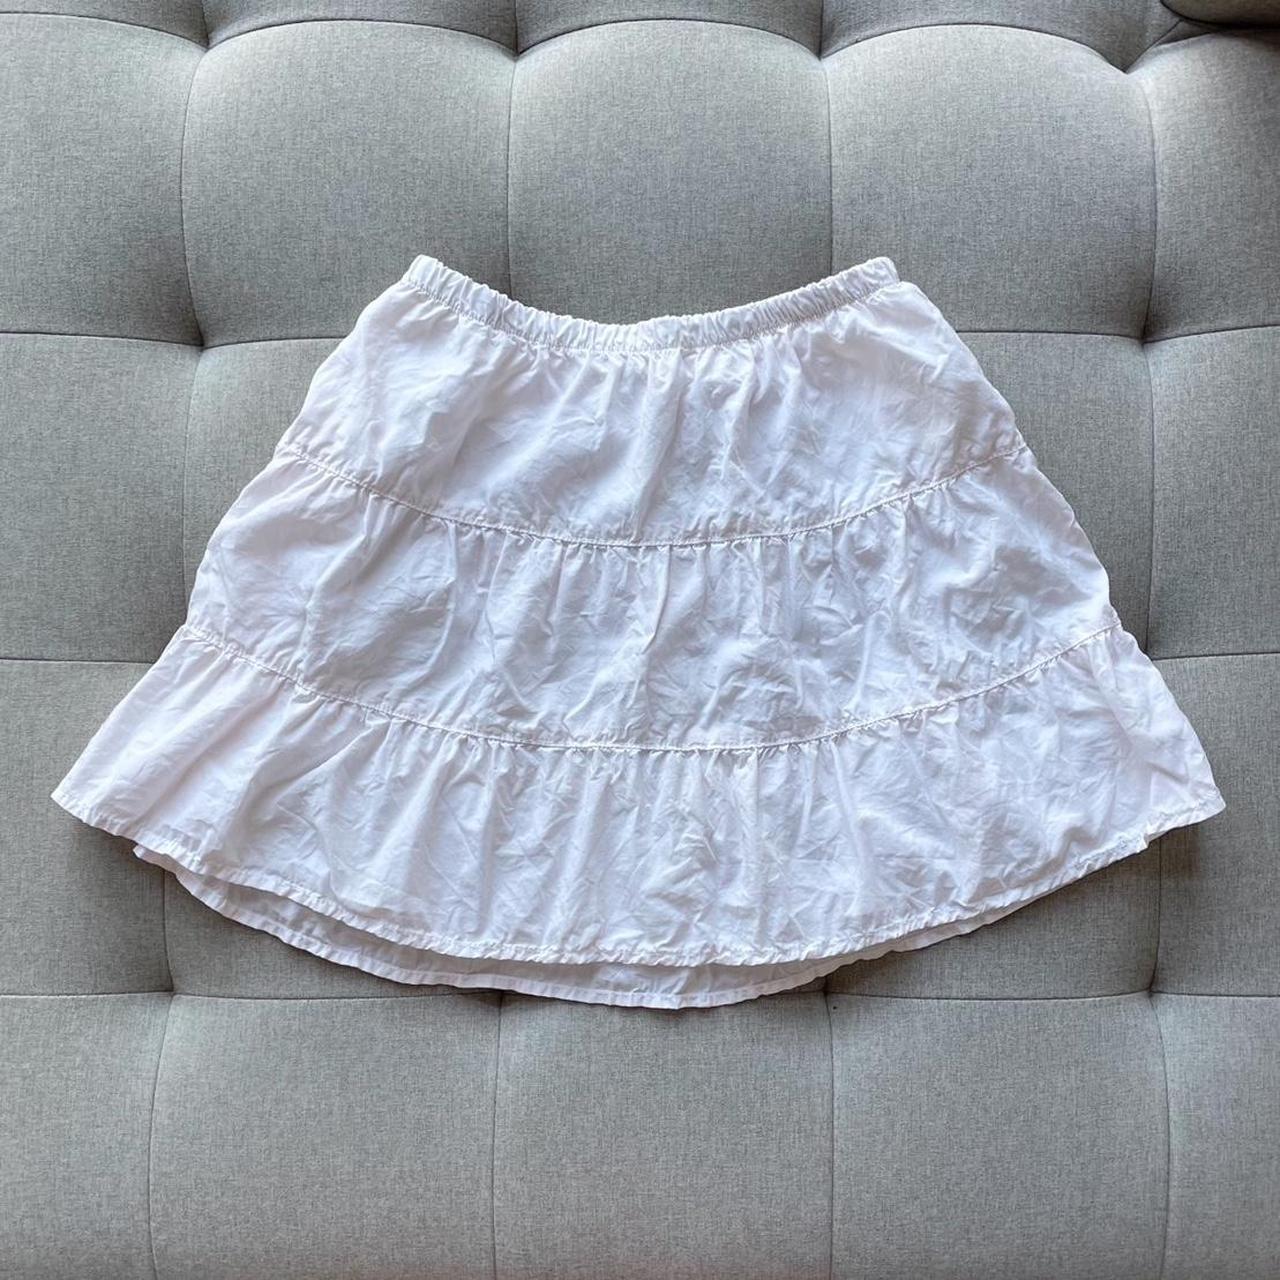 Brandy Melville Women's Pink and White Skirt | Depop